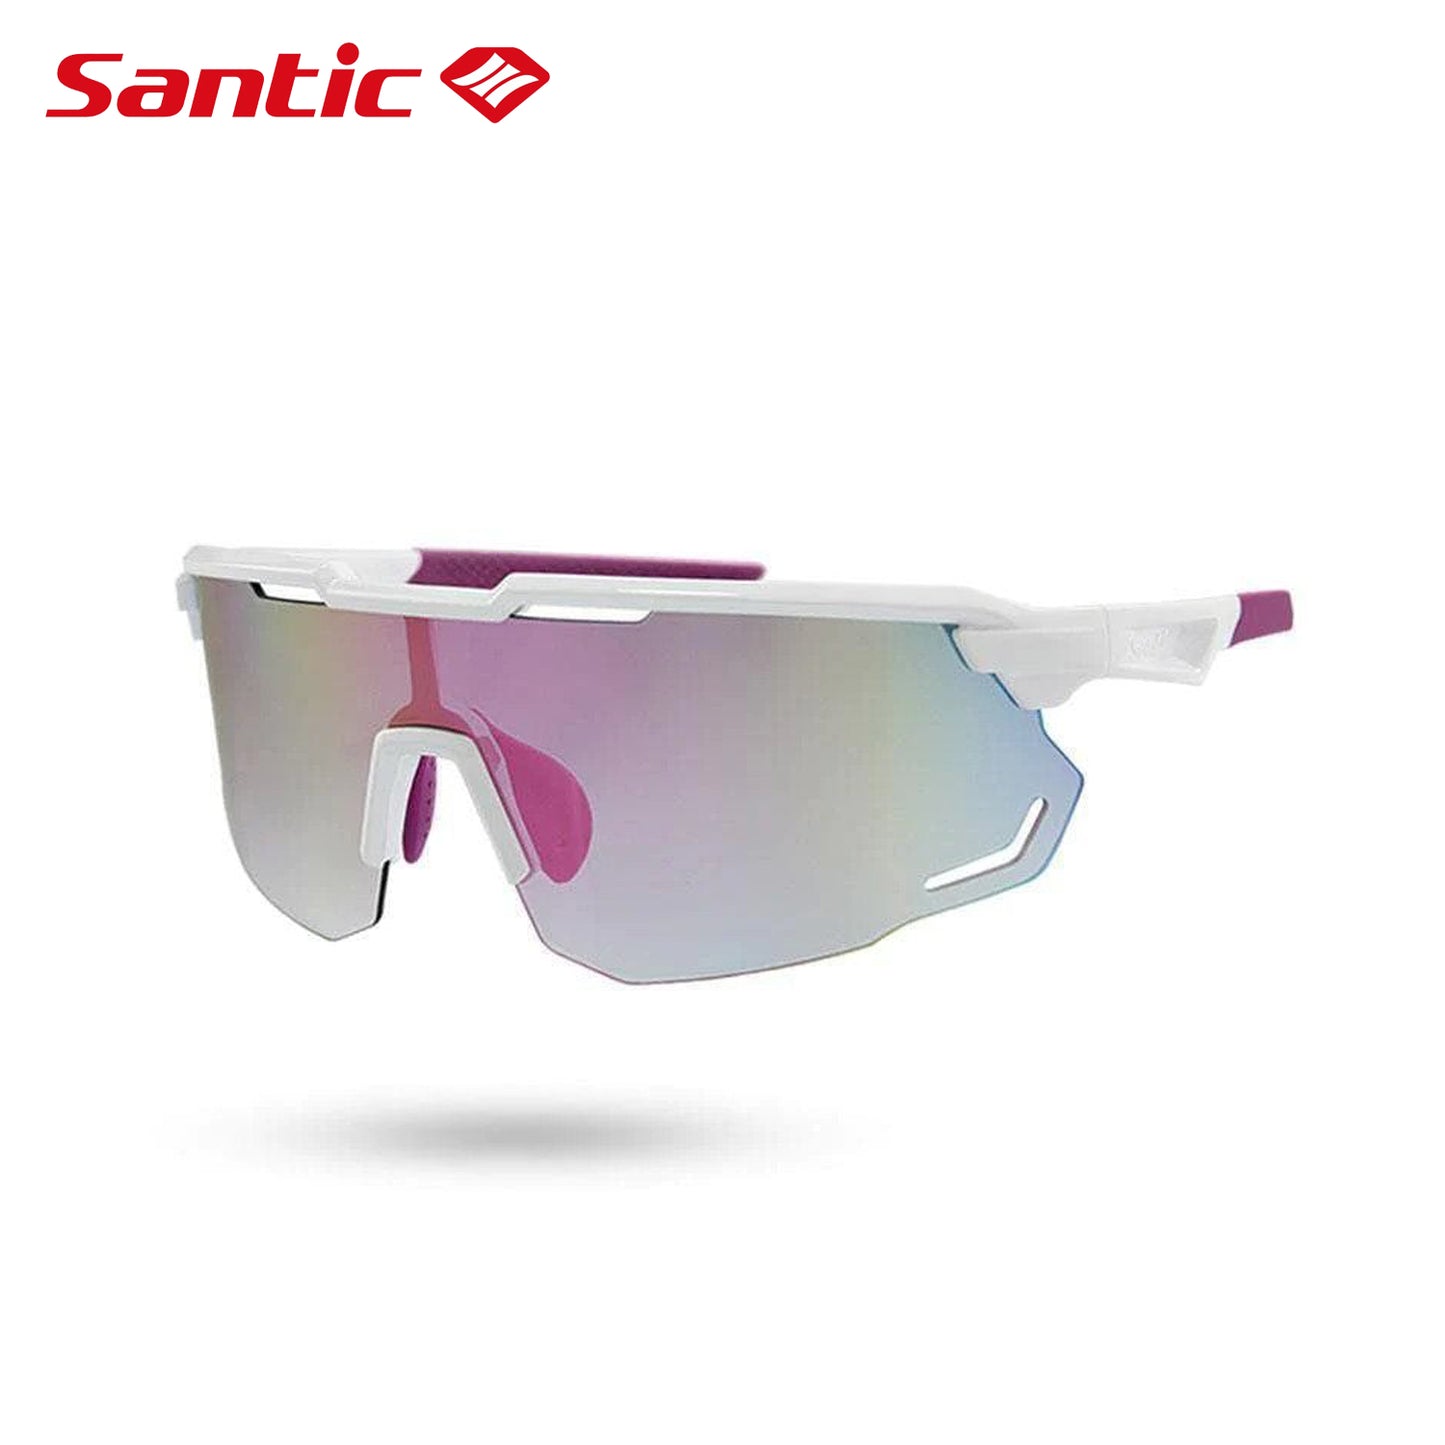 Santic Professional Sports Glasses - Purple